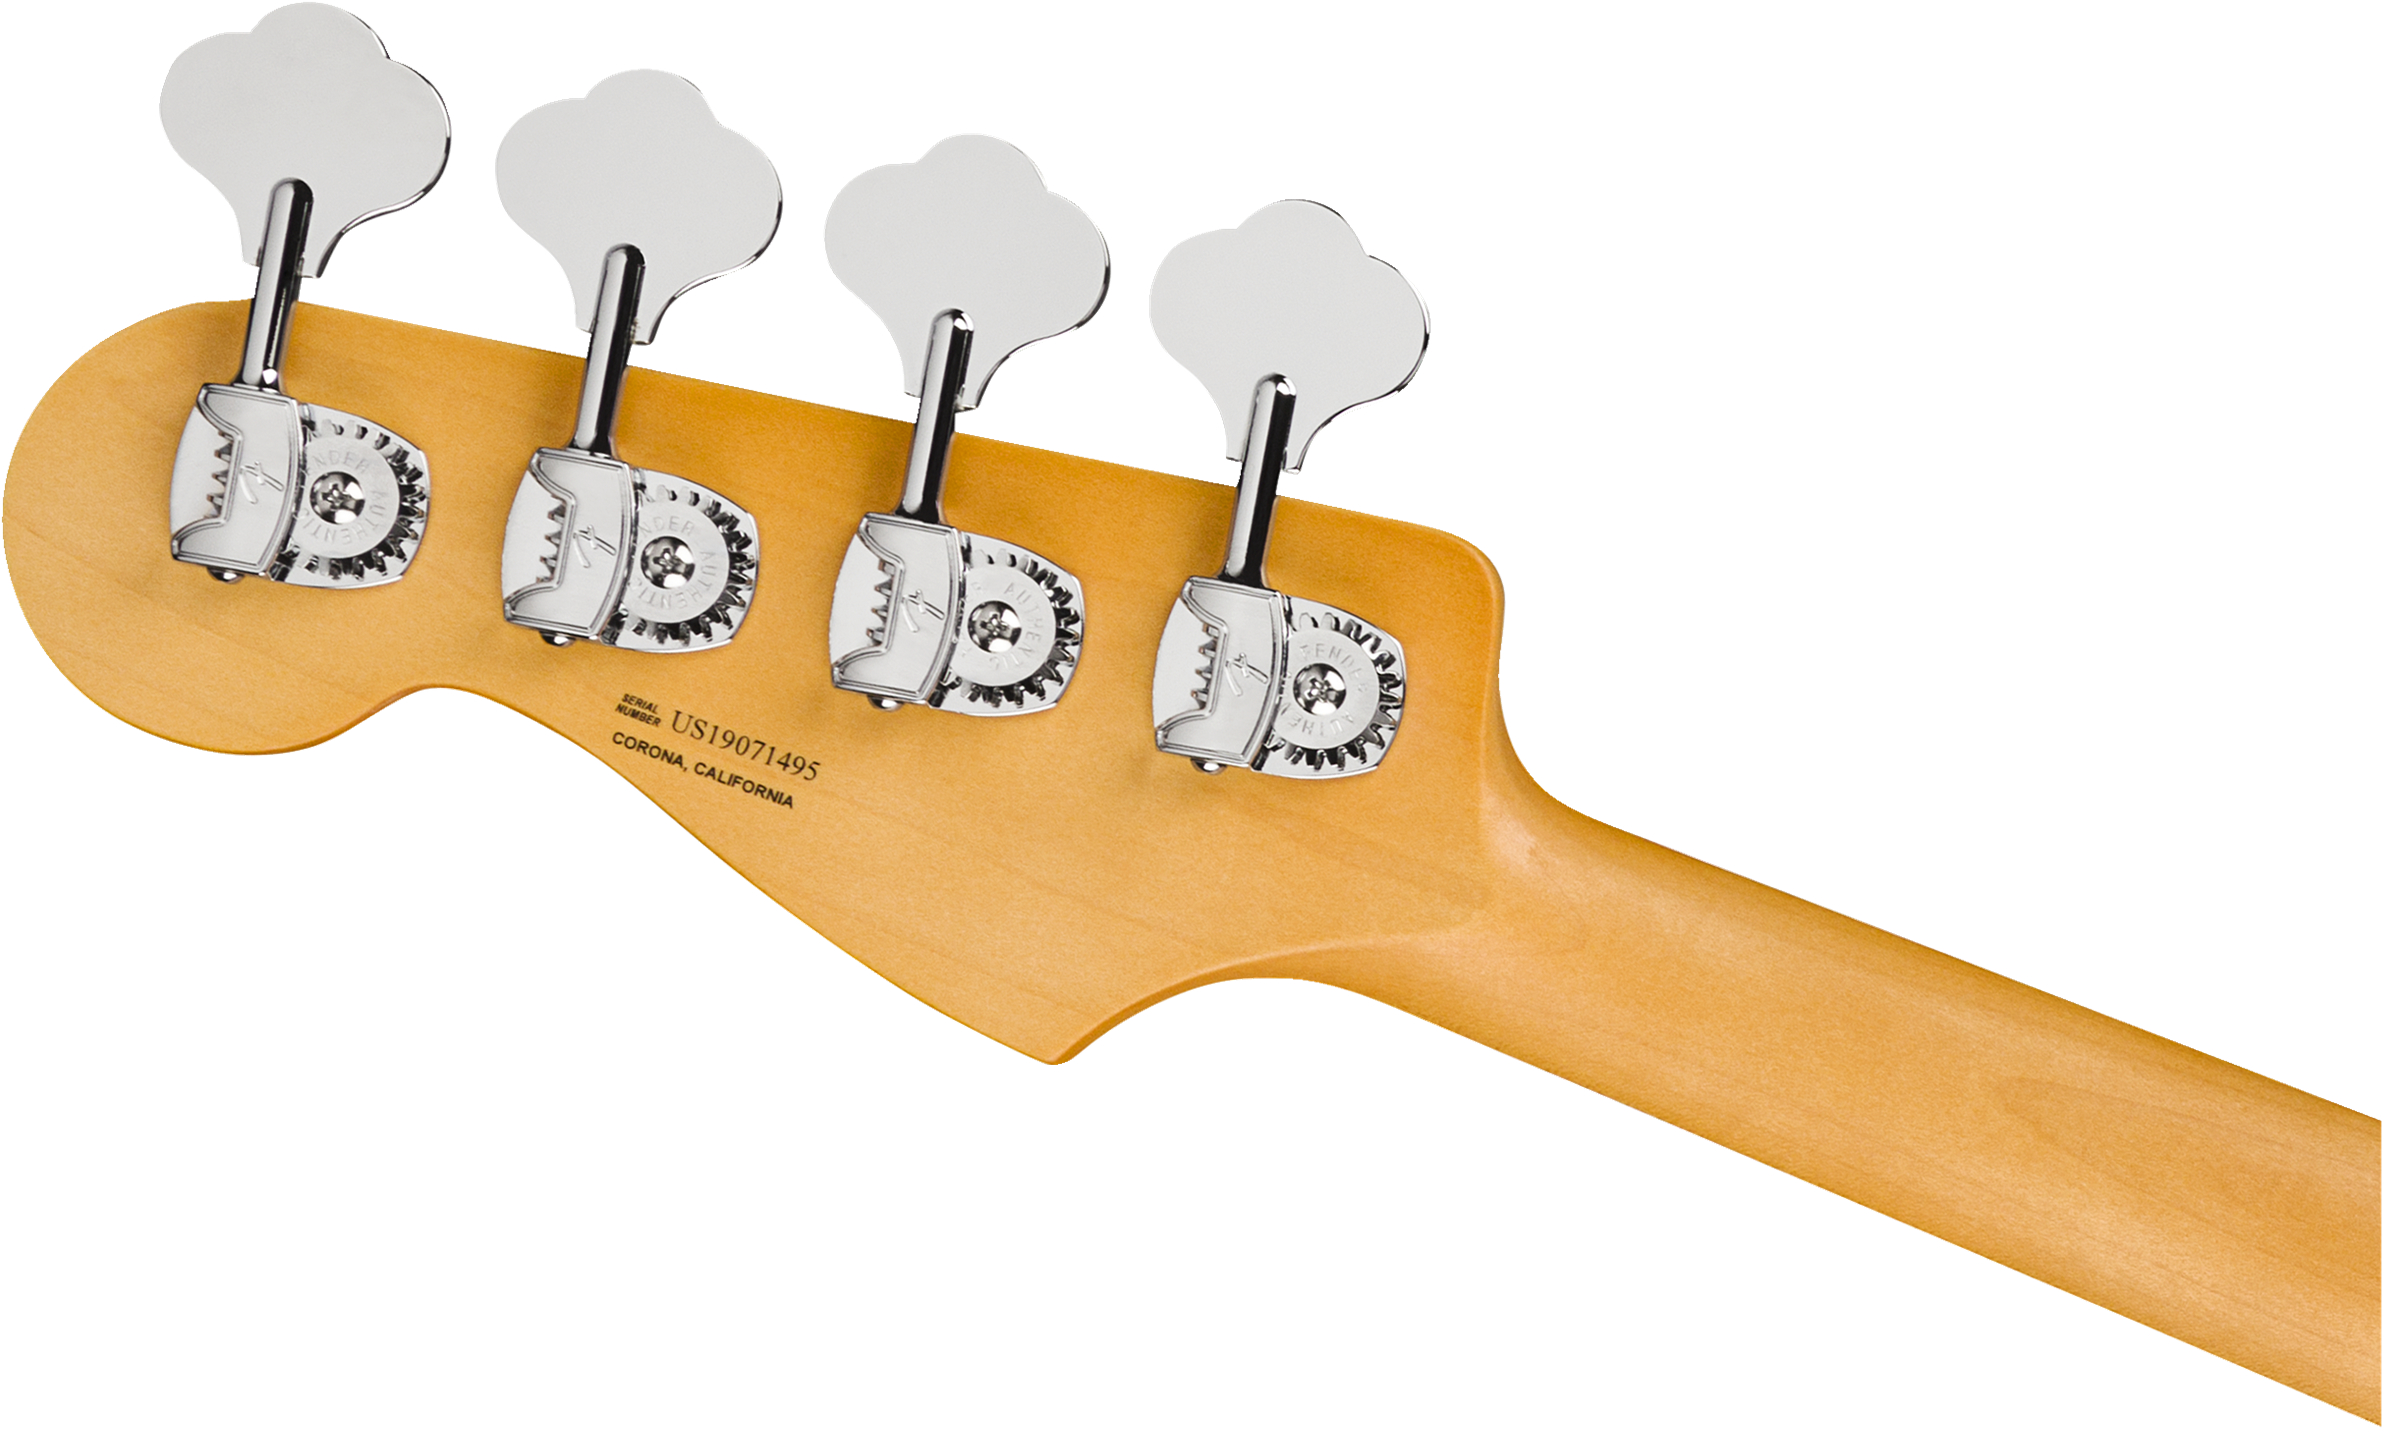 Fender American Ultra Jazz Bass RW SS ULTRBST